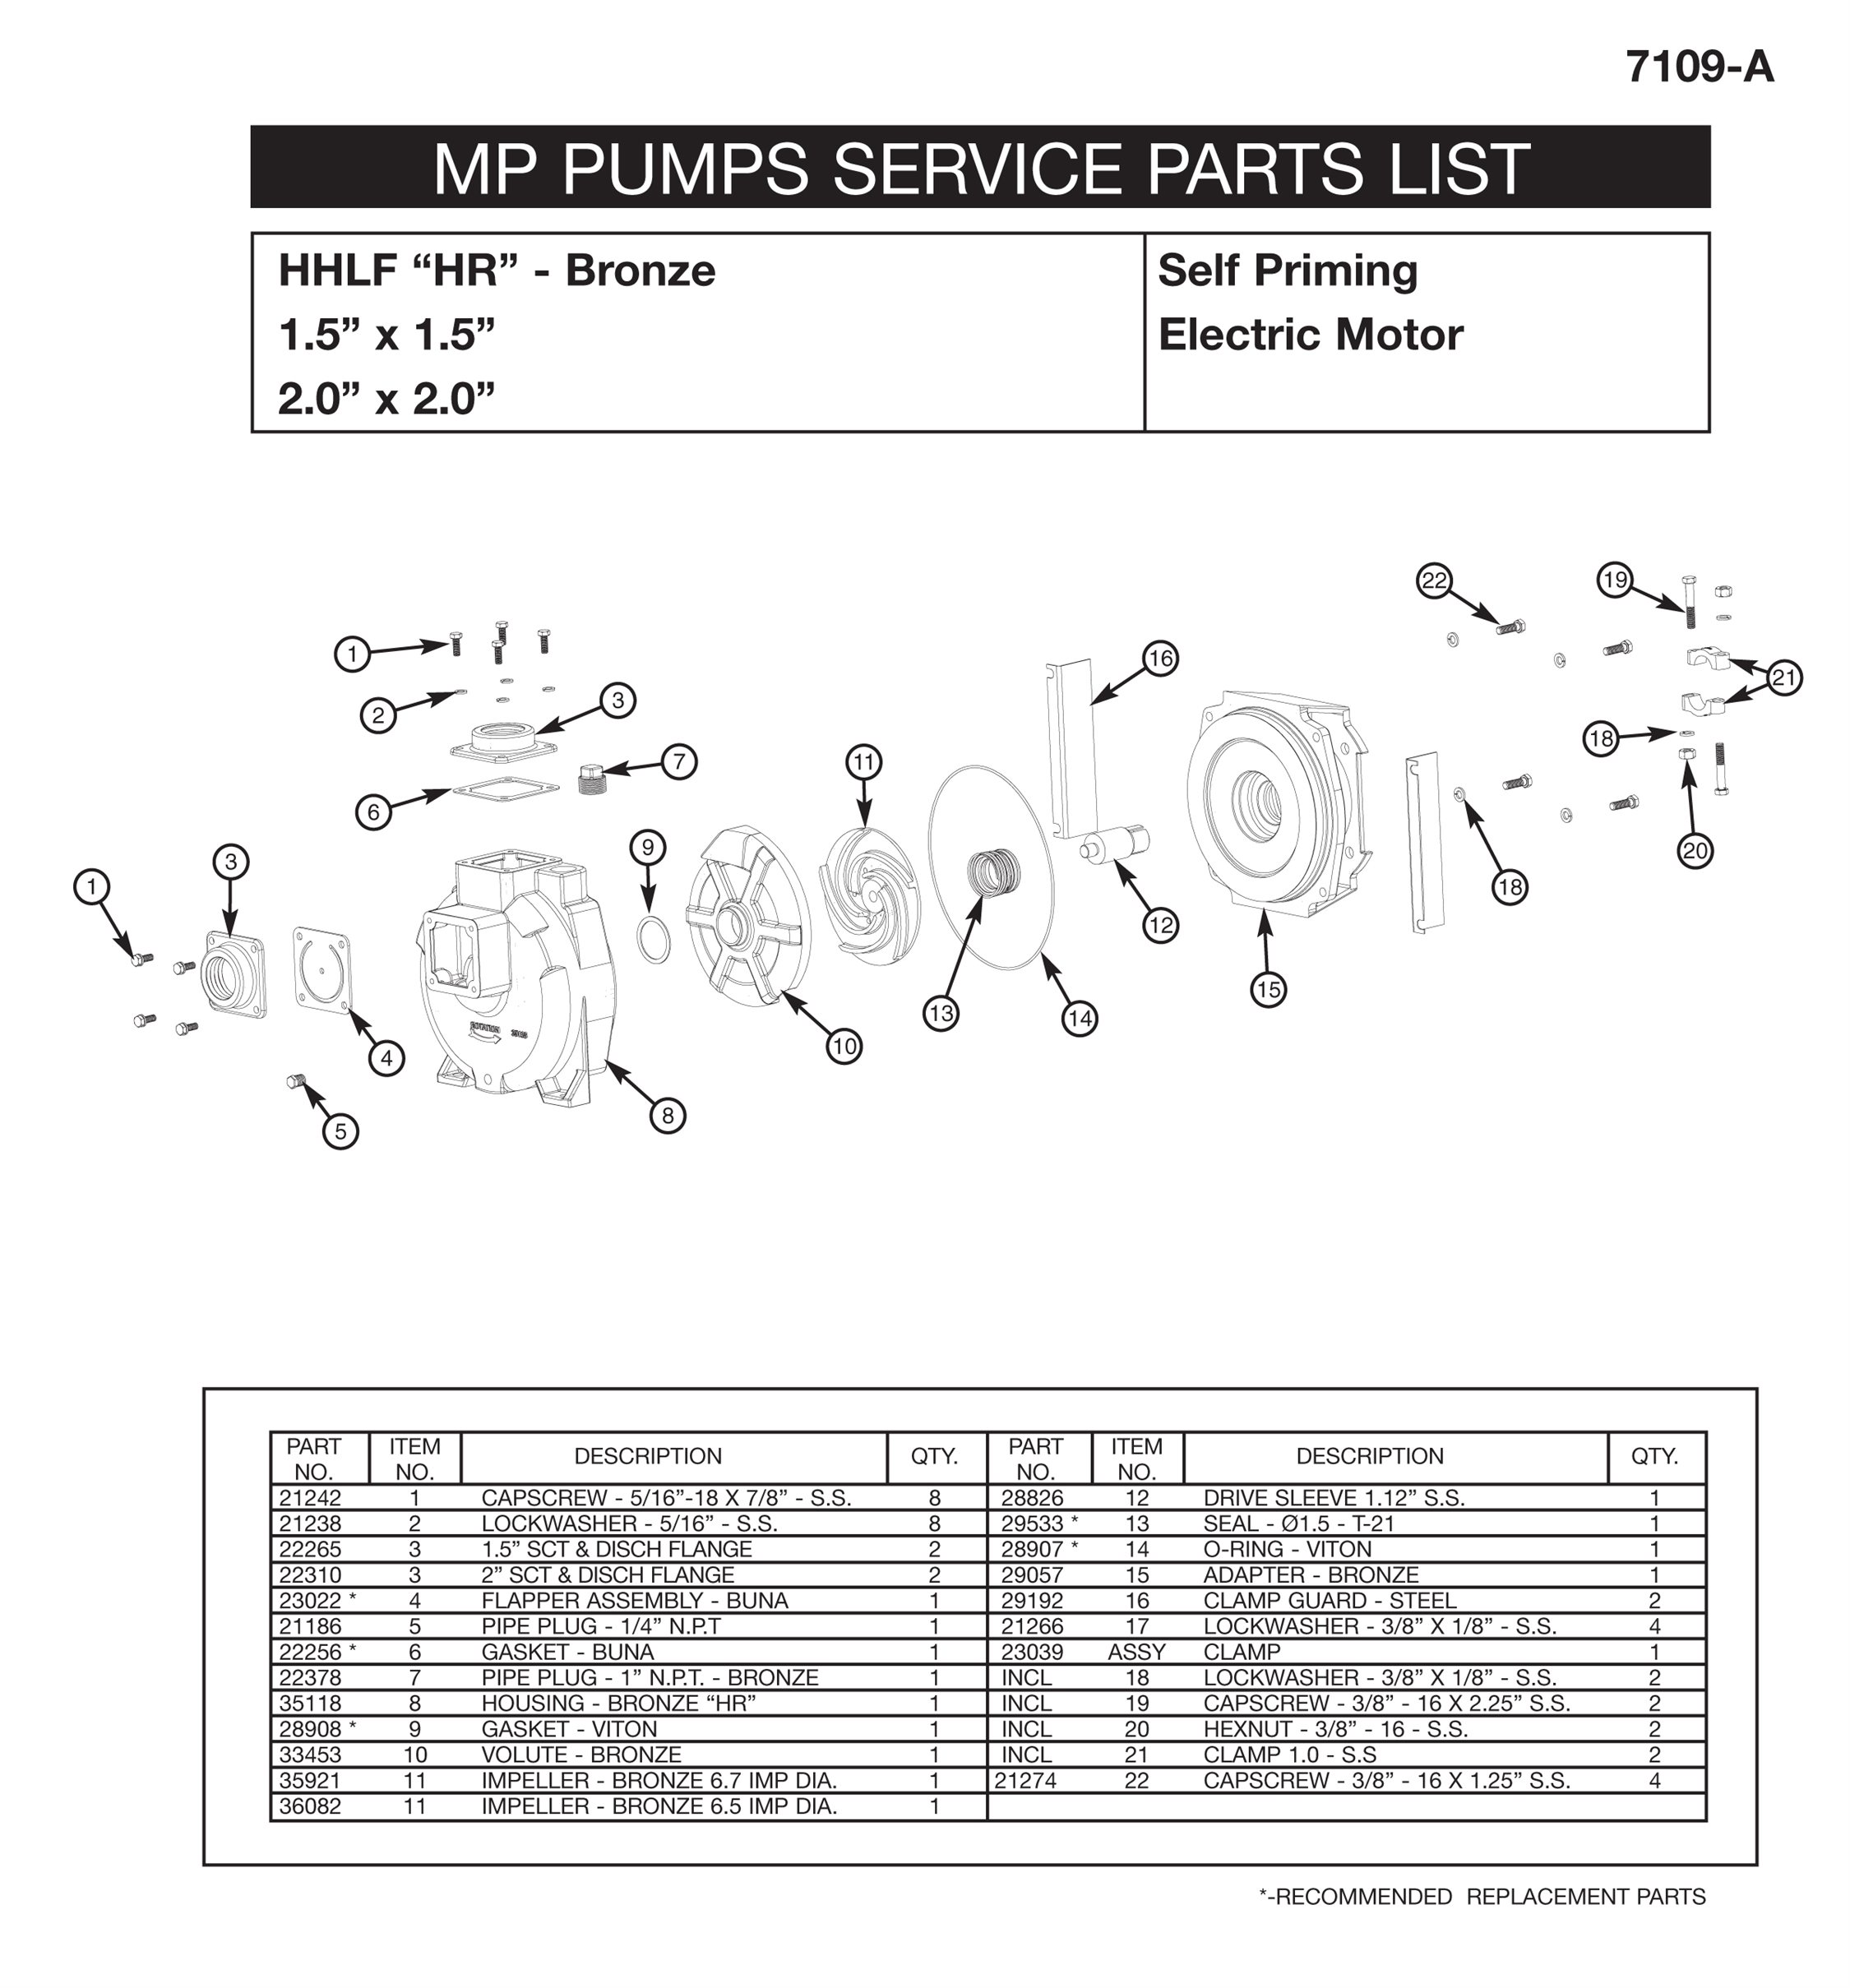 hhlf-high-pressure-water-pump_parts-list-7109-a